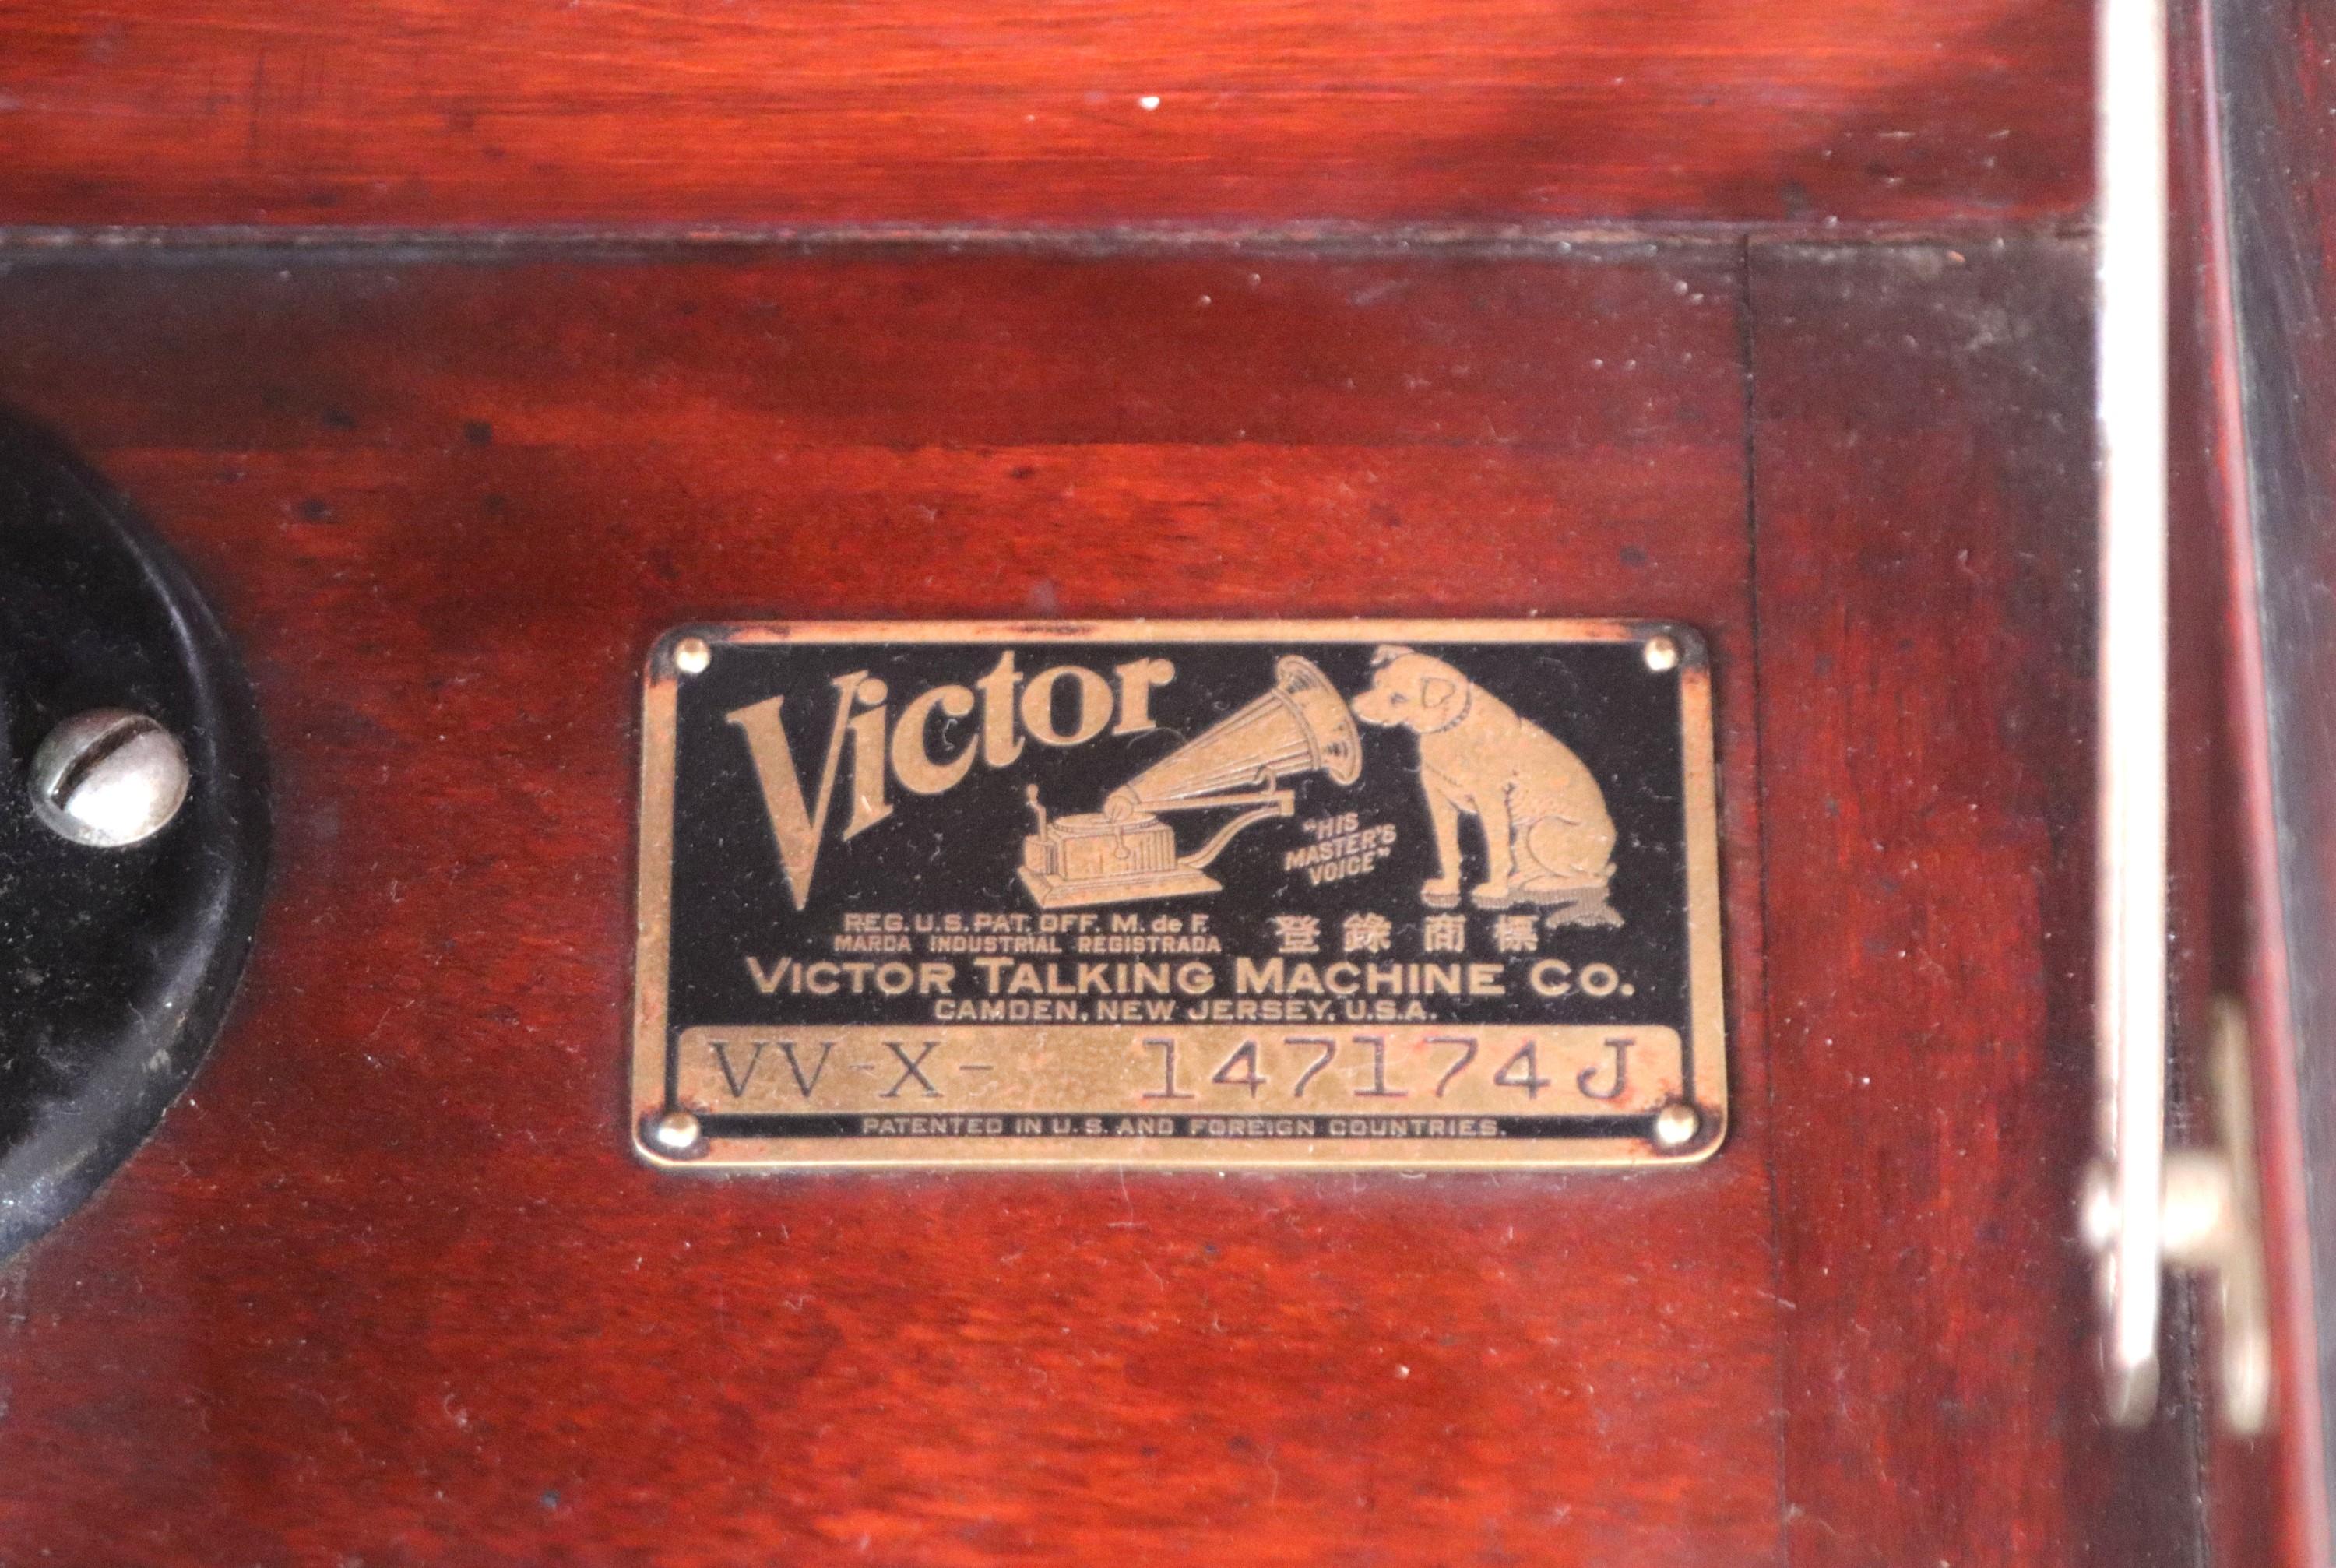 Victrola VV-X Bodenmodell Phonograph von The Victrola Talking Machine Co. im Zustand „Gut“ im Angebot in New York, NY